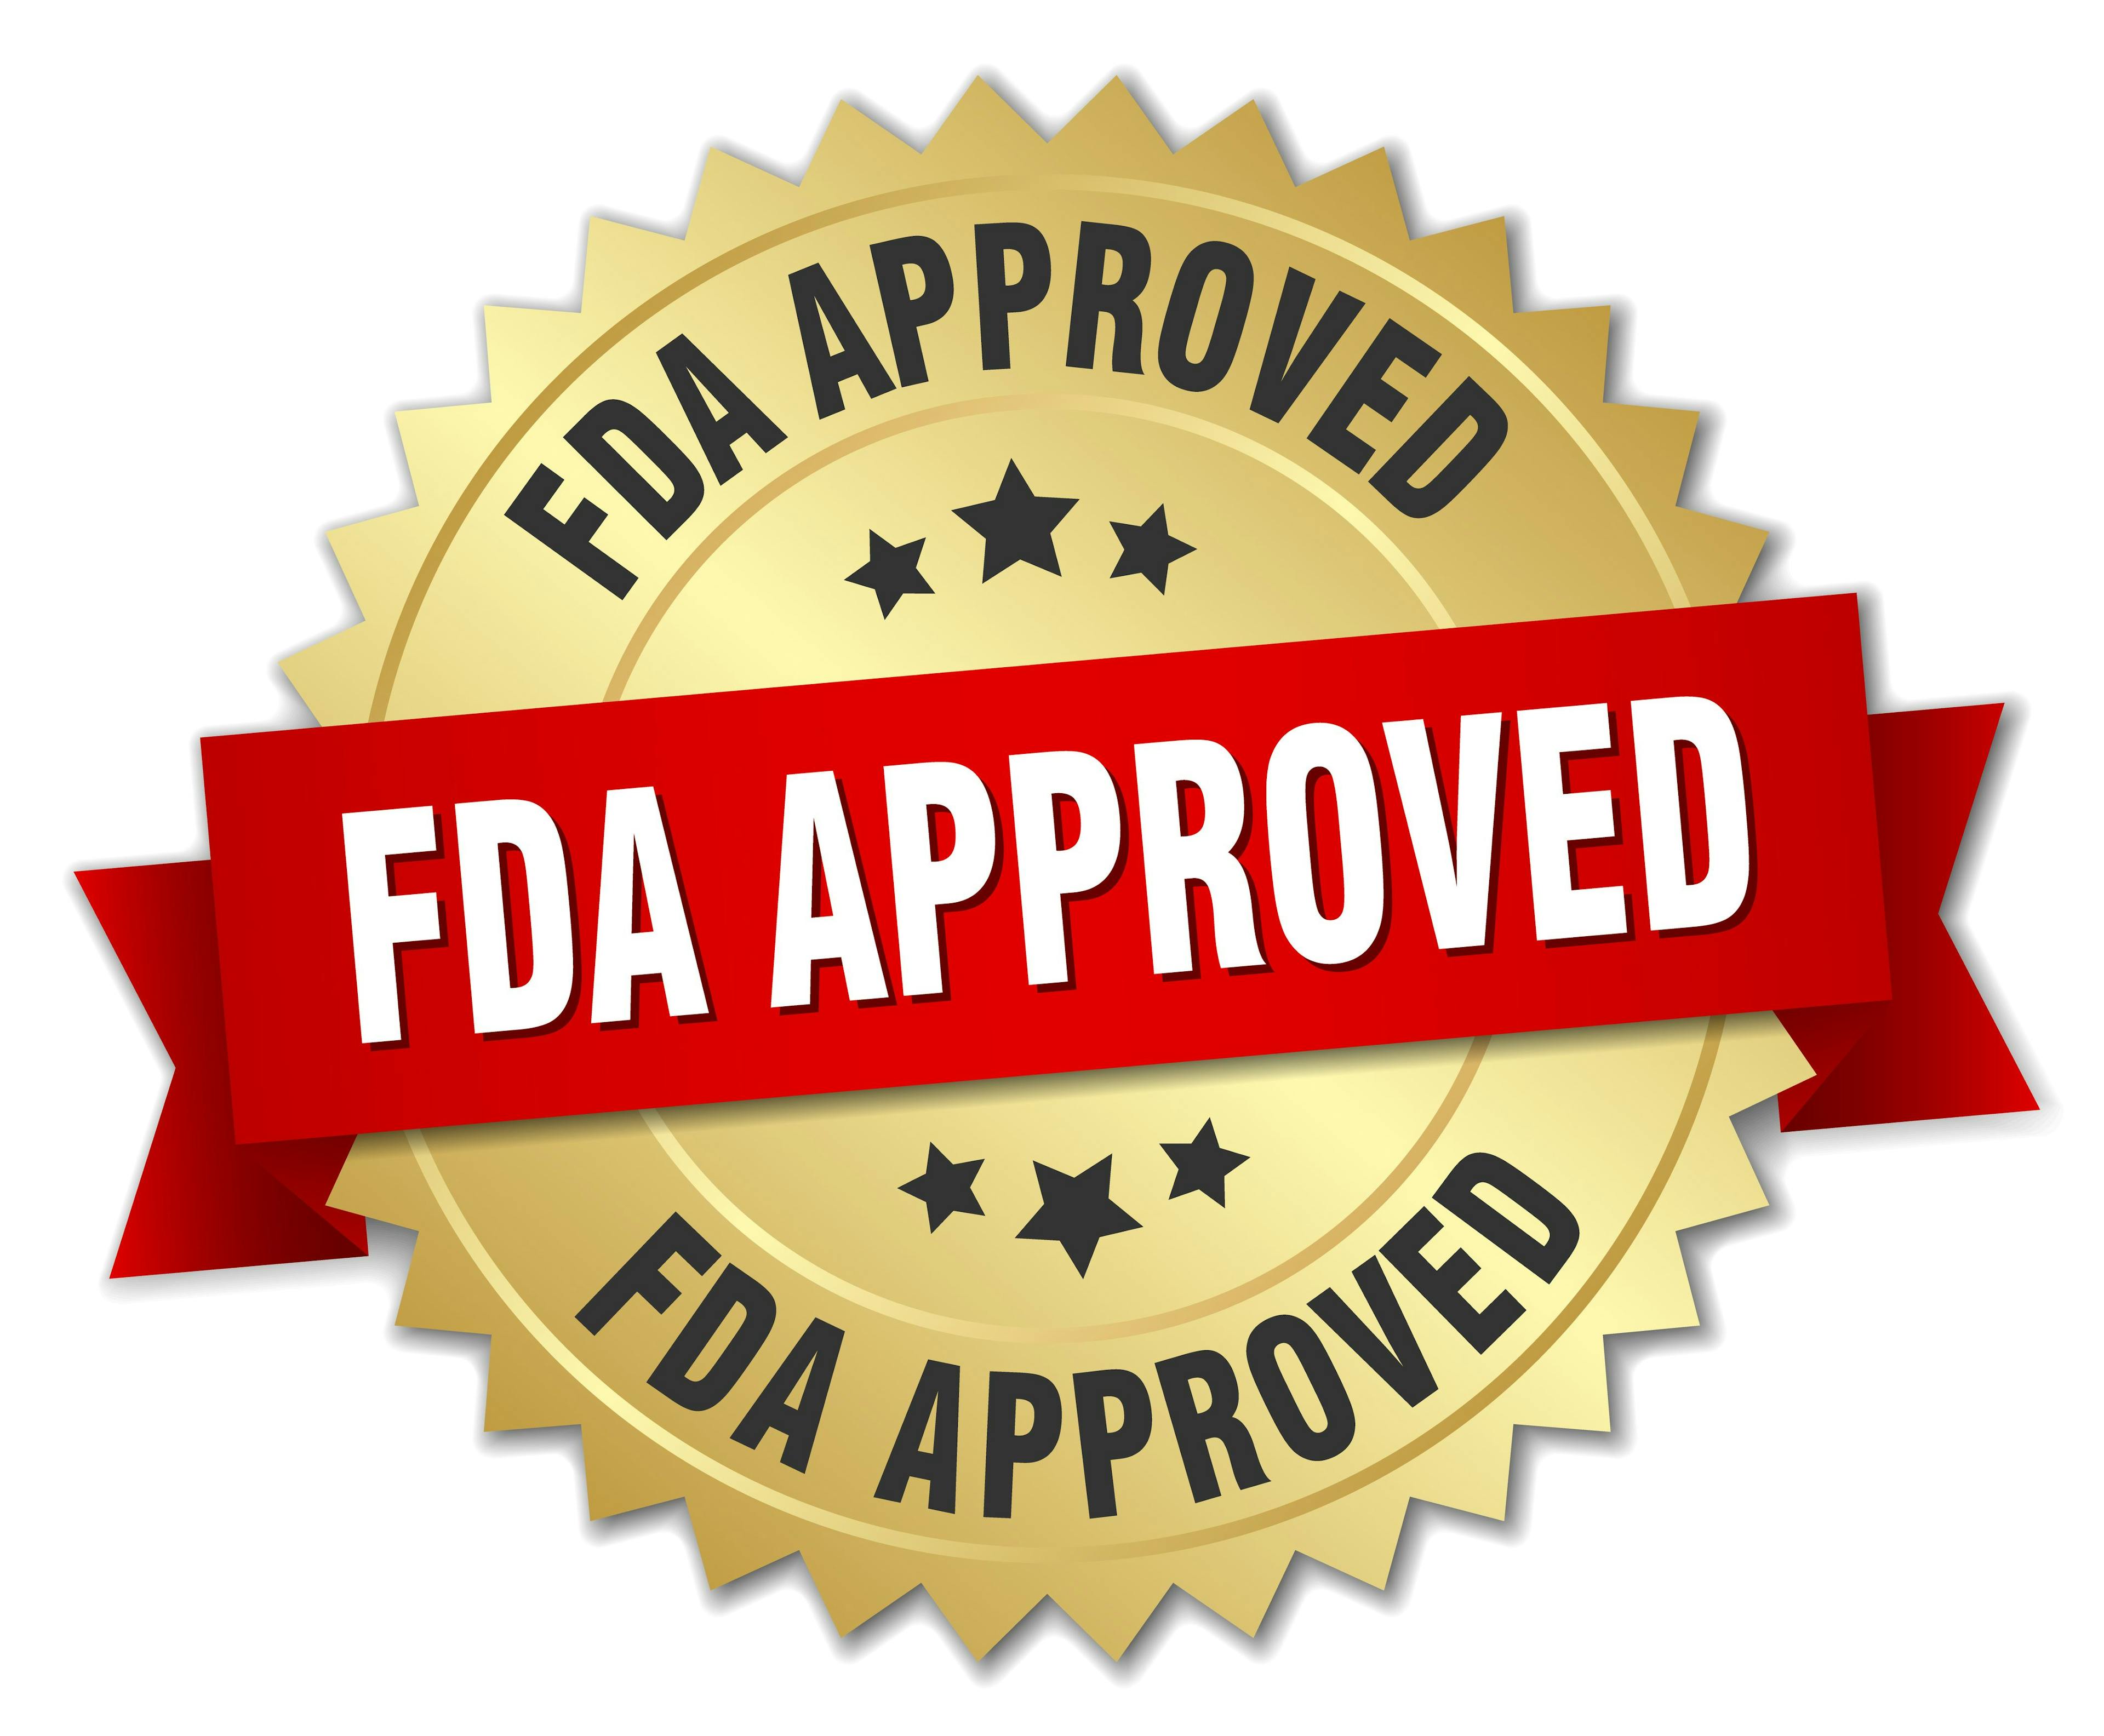 FDA approved gold badge